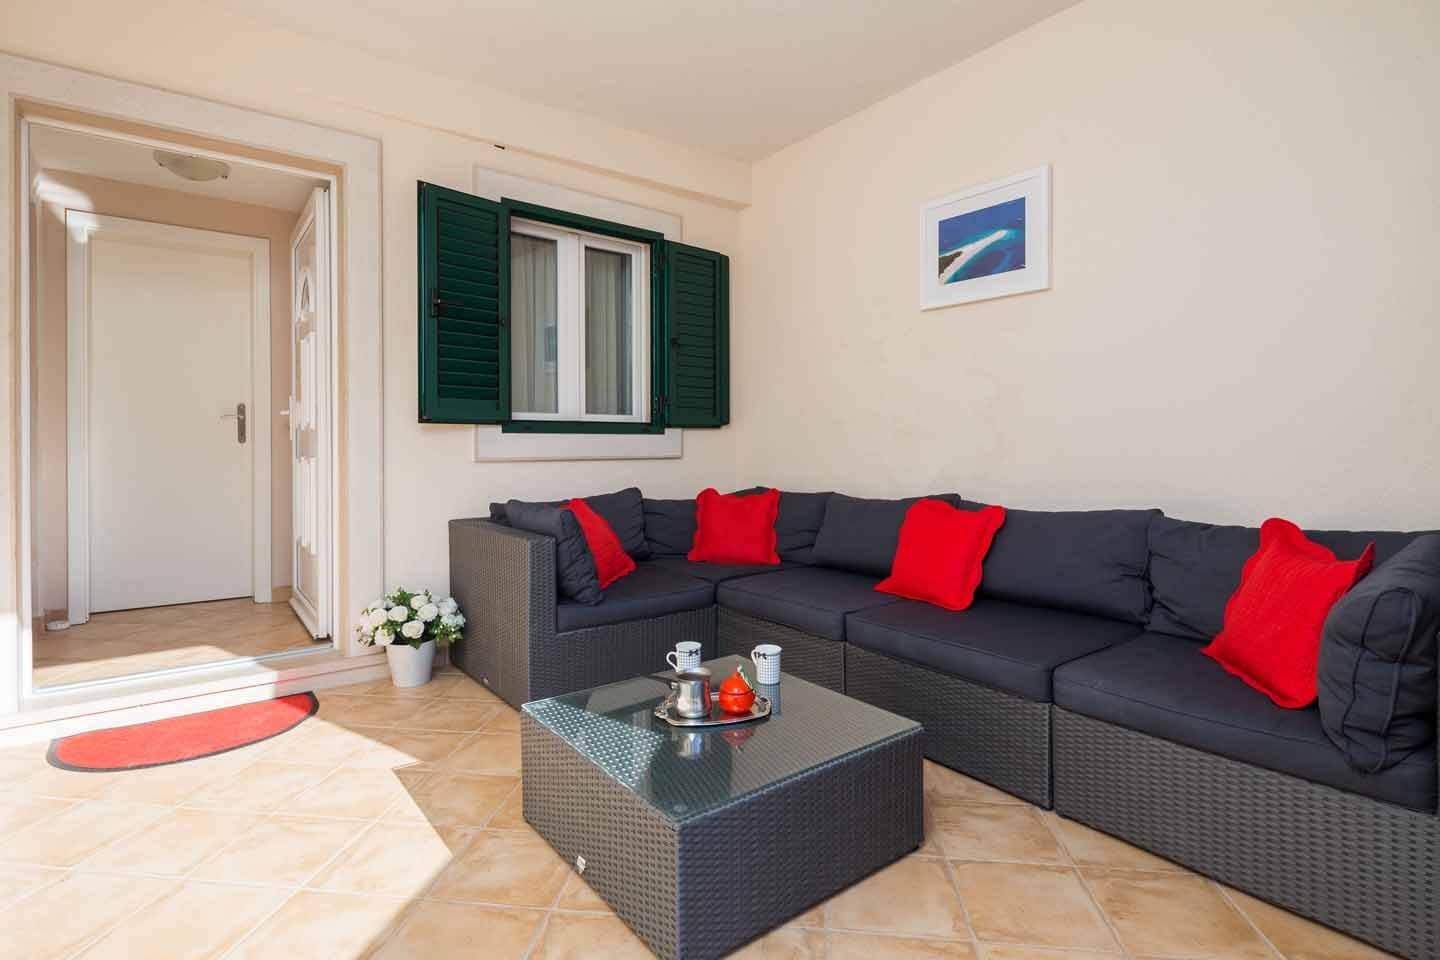 Villa-Prunella-large-sofa.jpg